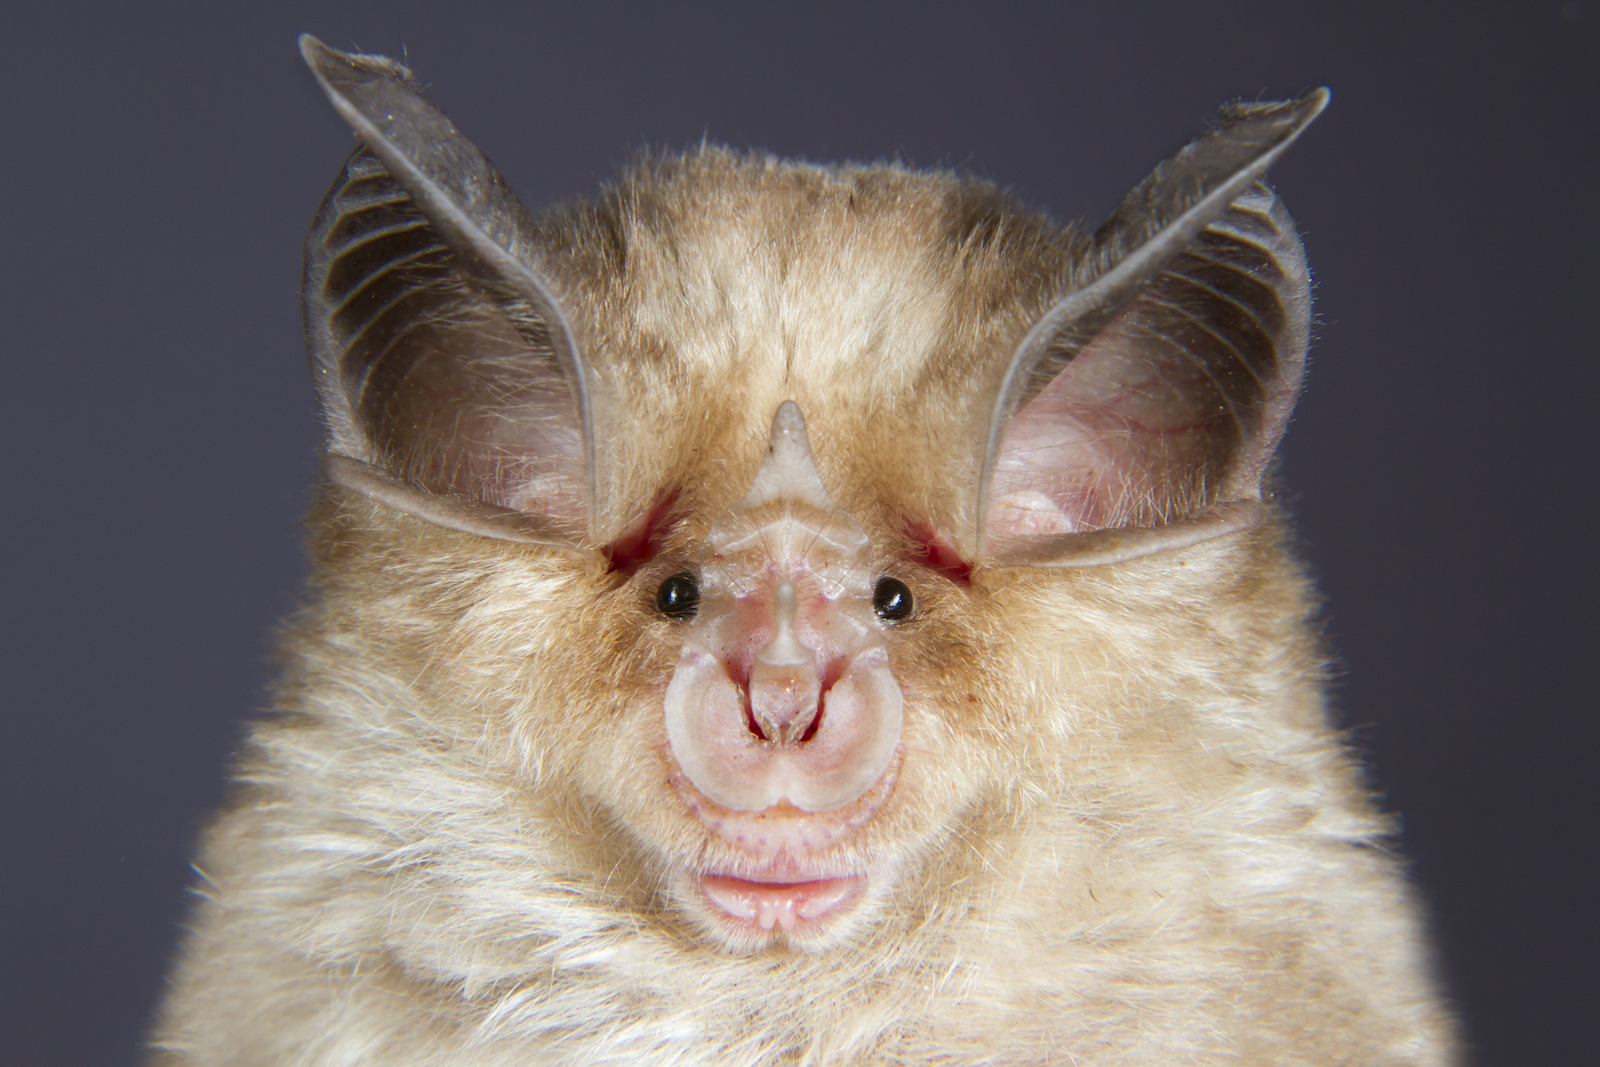 a closeup on the face of a horseshoe bat